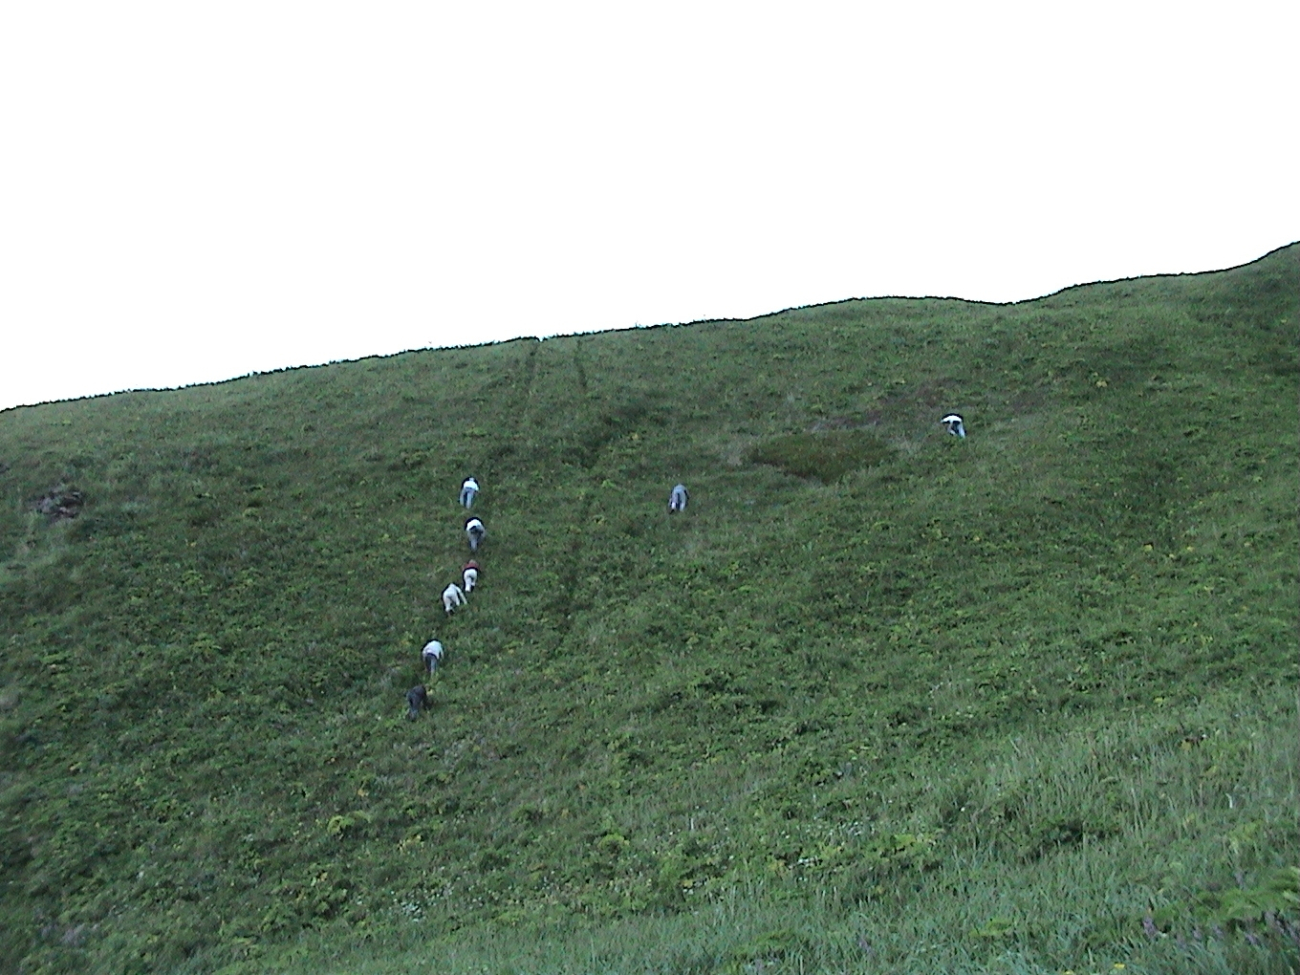 Climbing the hill for posterior sledding at Gunnysack Island